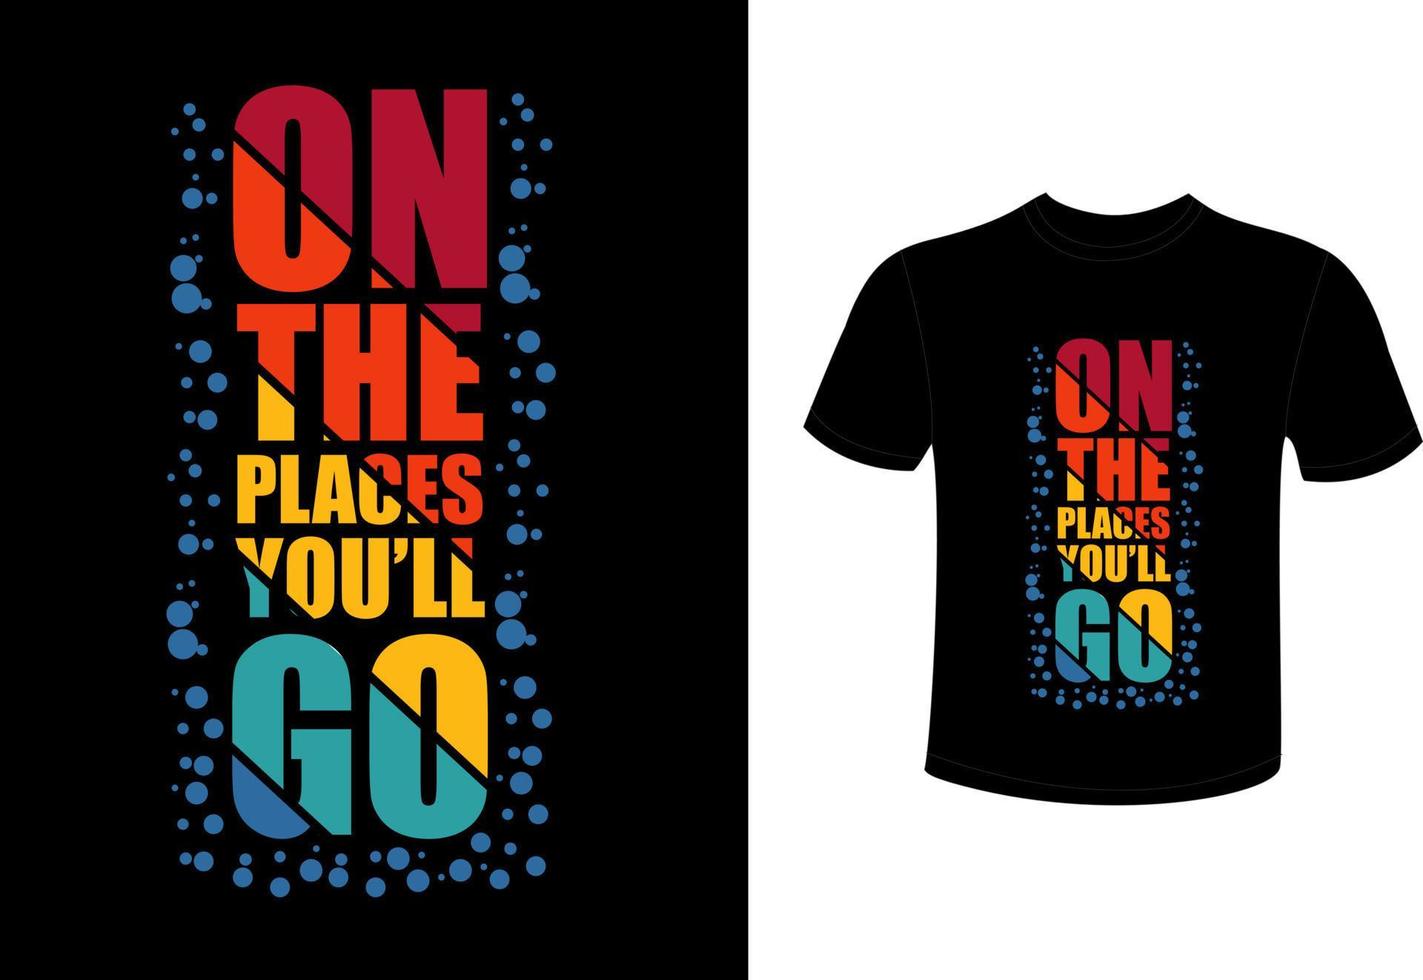 tour travel t shirt design , adventure travel t shirt design vector